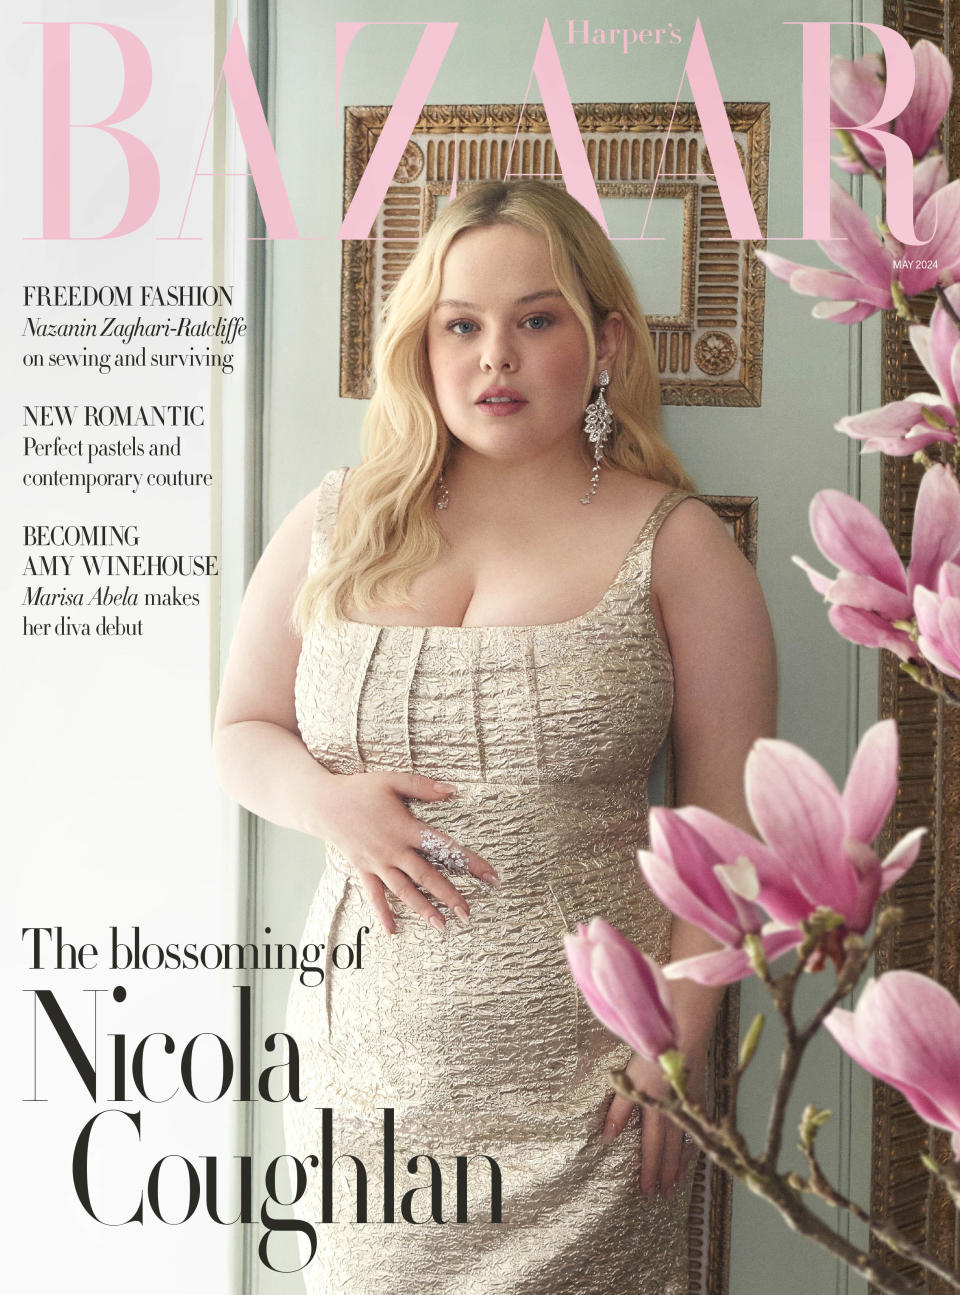 Nicola Coughlan on the cover of the magazine (Harper’s Bazaar UK/Agata Pospieszynska)